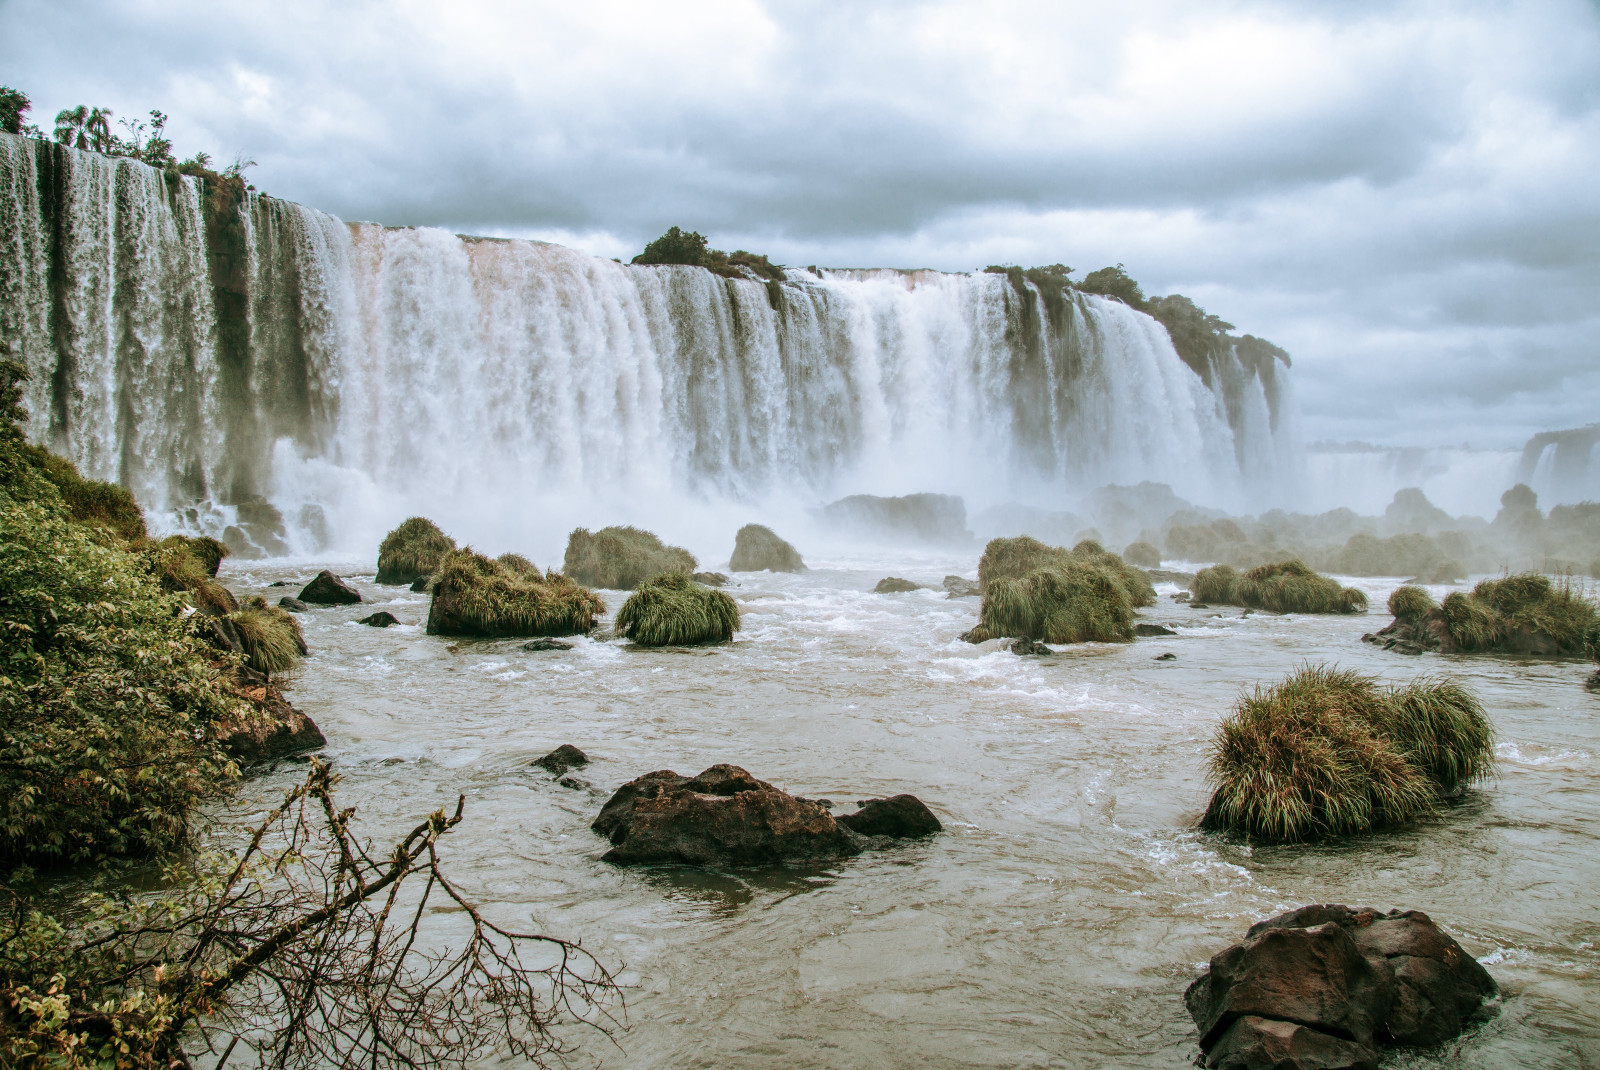 Foz de Iguaçu waterfalls with white rushing water crashing into a pool with rocks in Brazil.